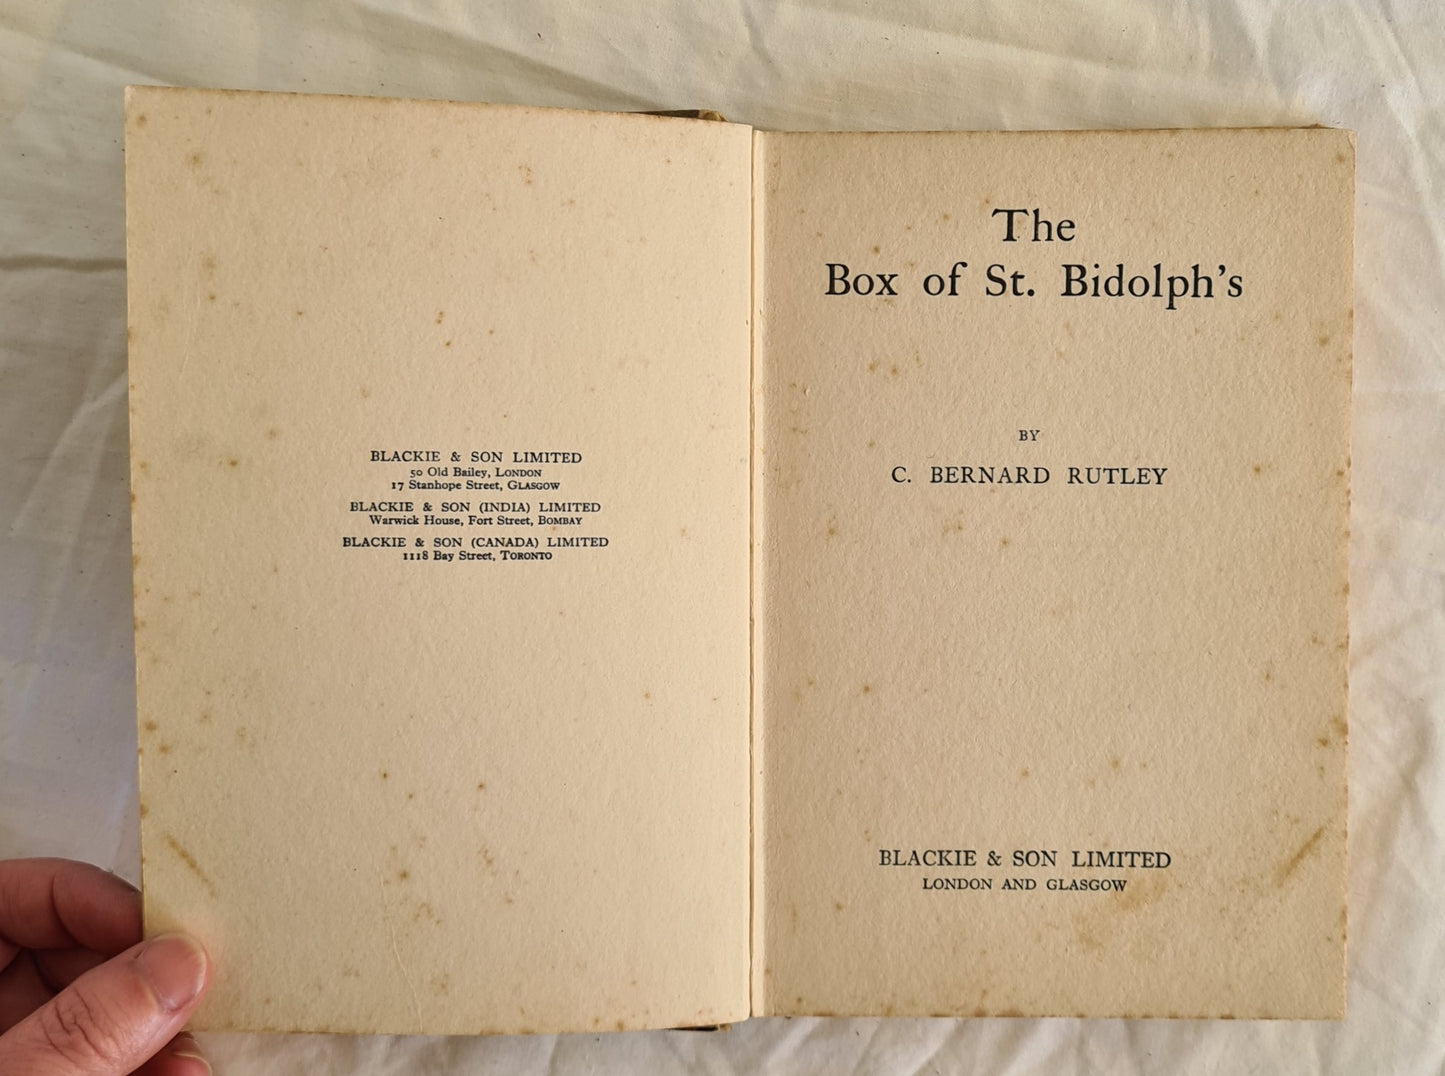 The Box of St. Bidolph’s by C. Bernard Rutley